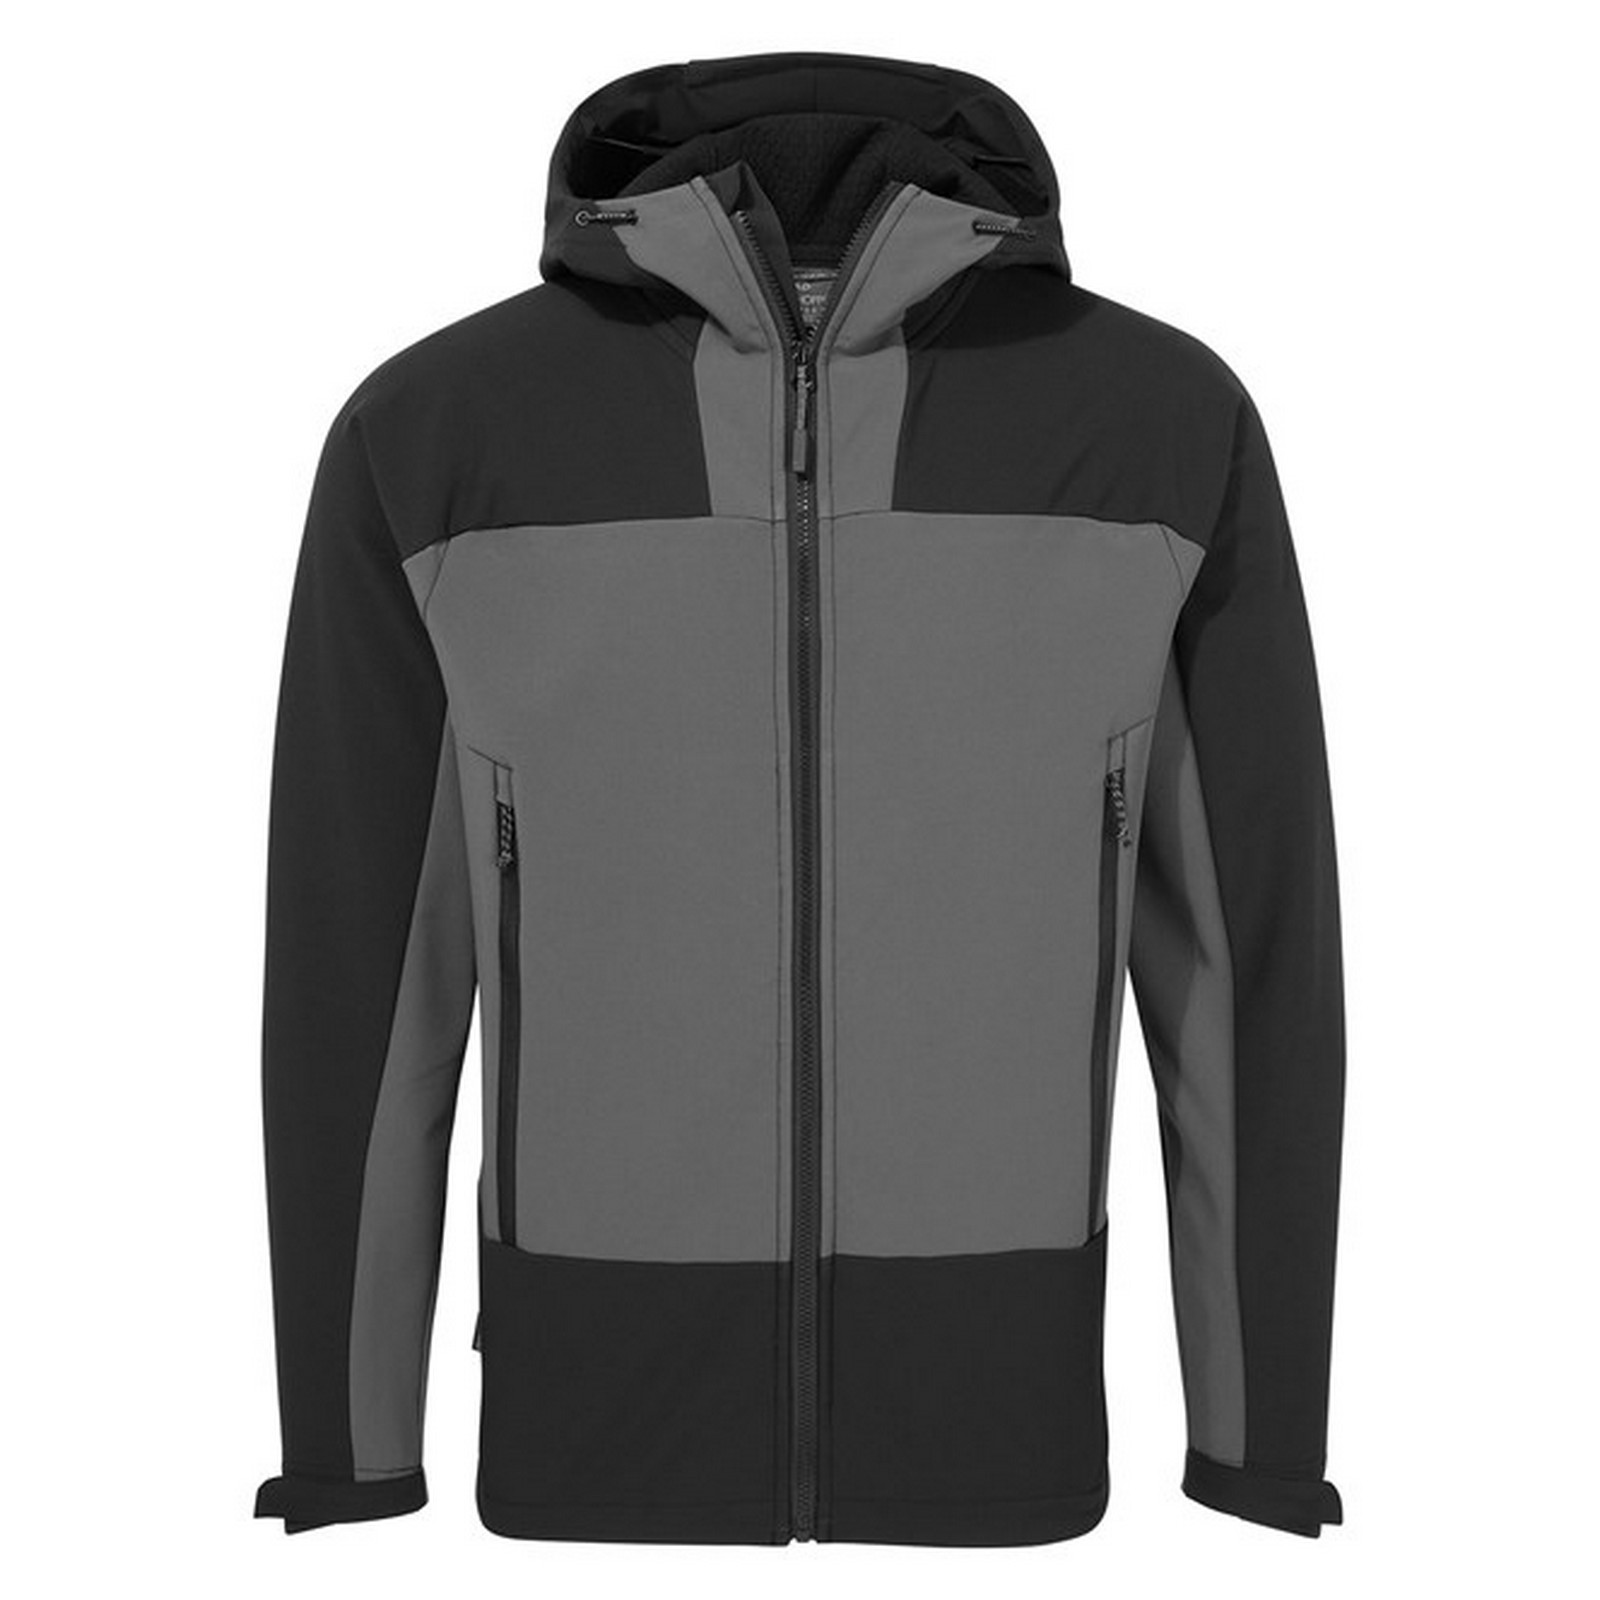 Craghoppers Expert hooded softshell jacket | WISE Worksafe